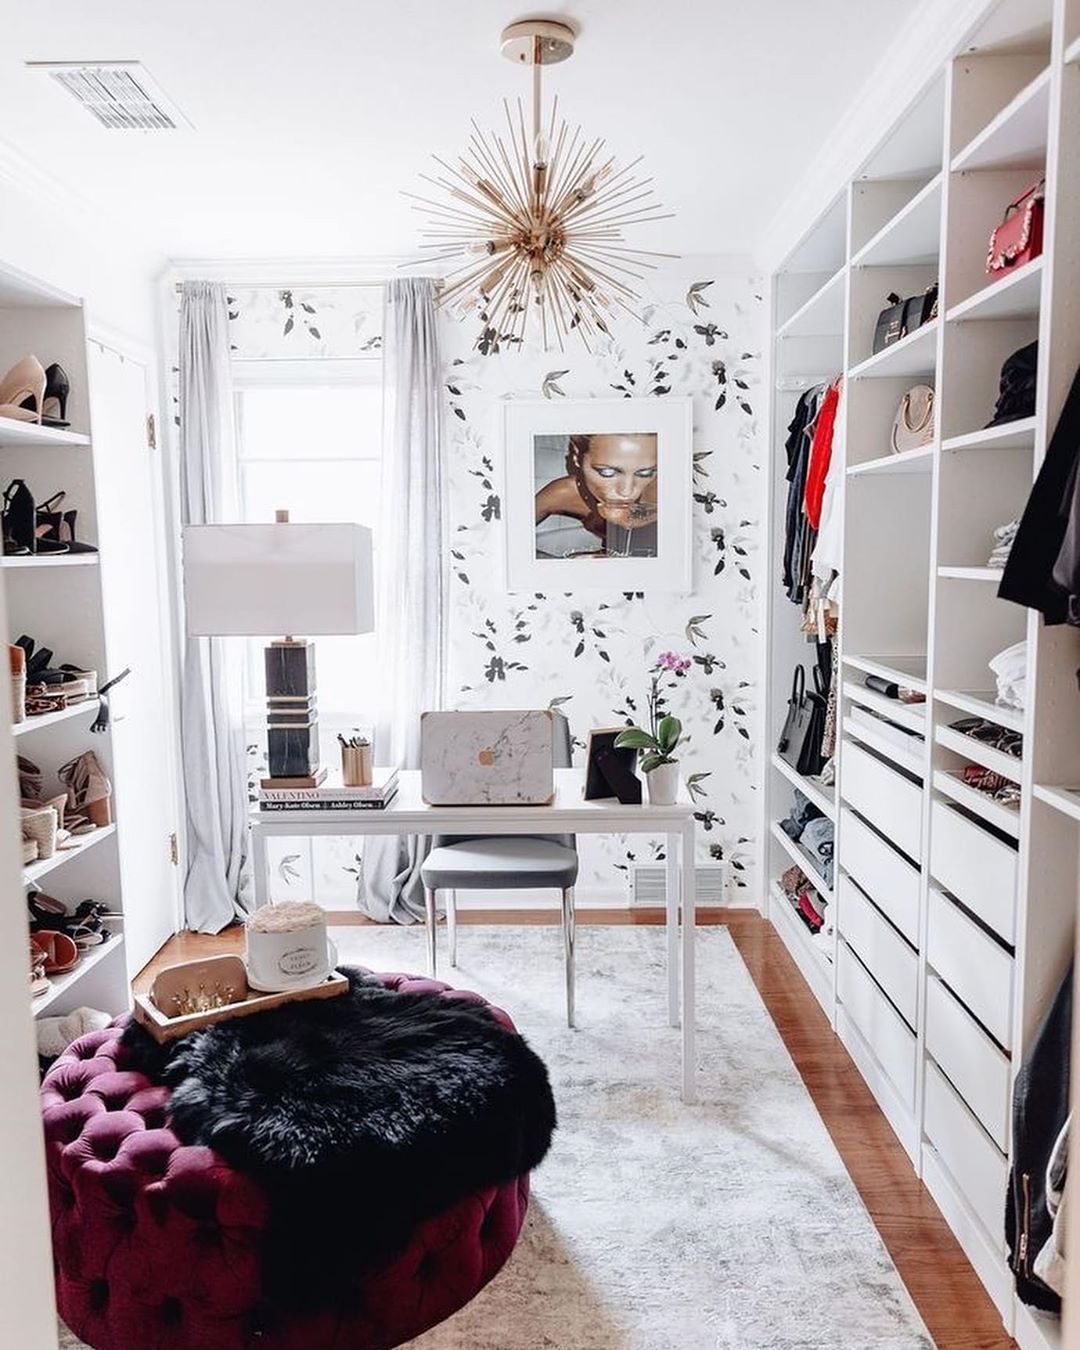 Walk-in closet home office combination. Photo by Instagram user @raraec